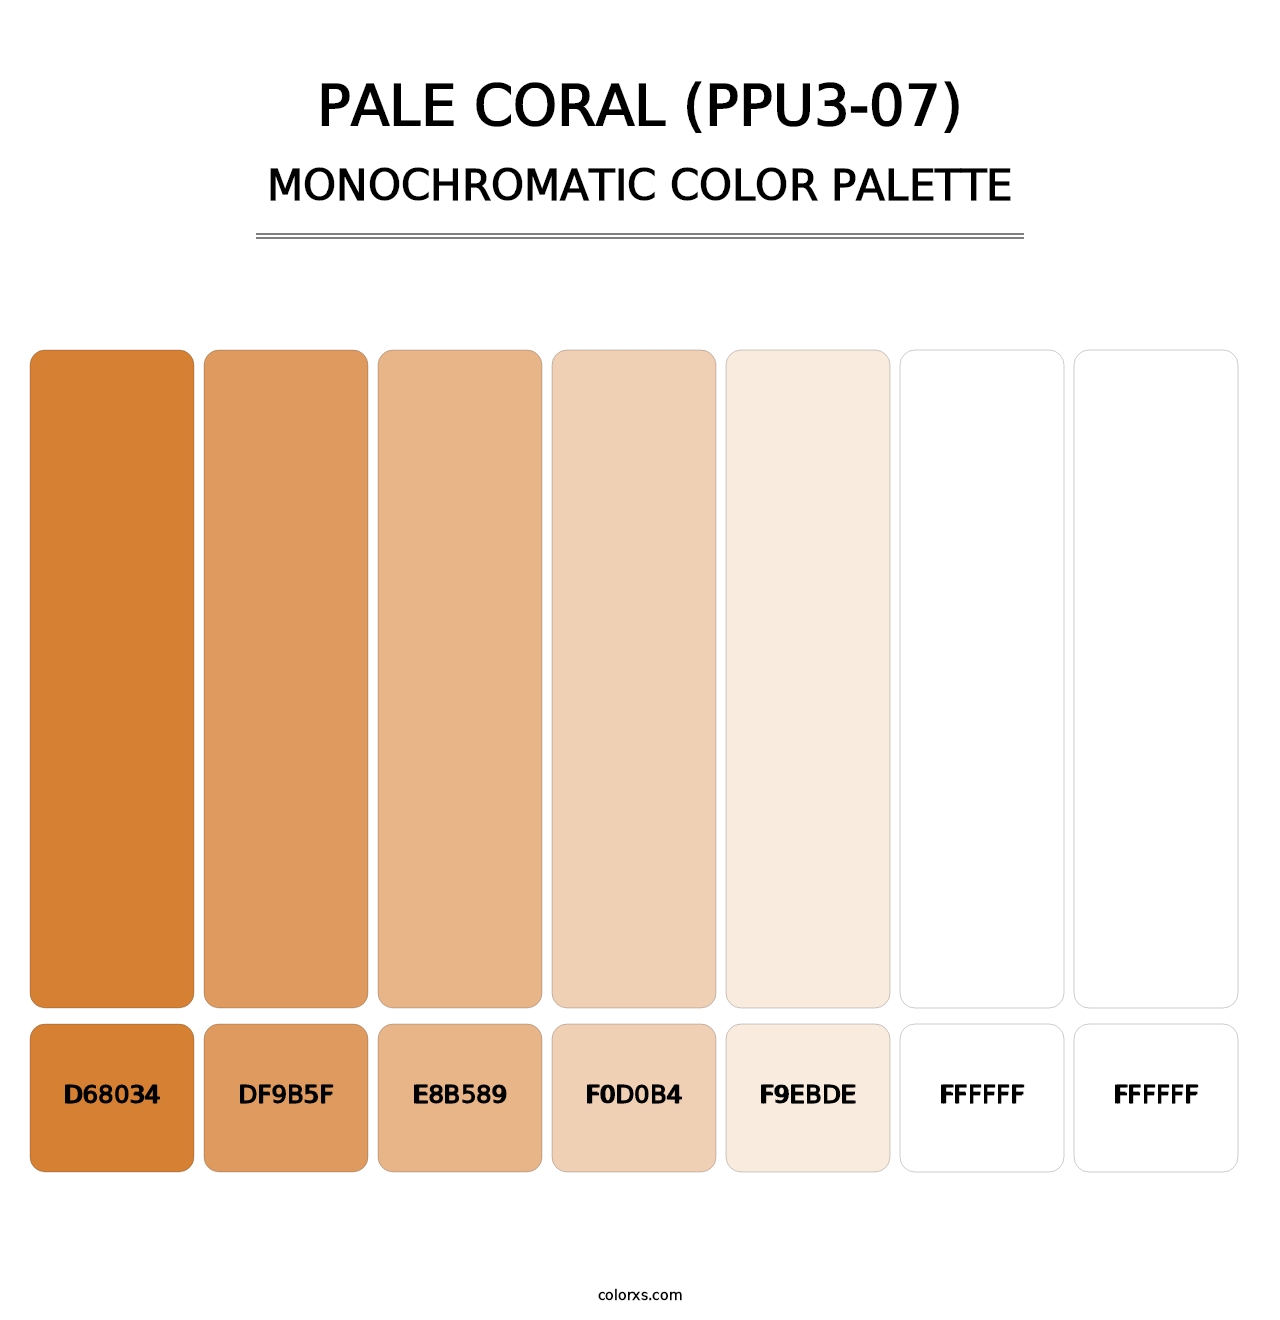 Pale Coral (PPU3-07) - Monochromatic Color Palette